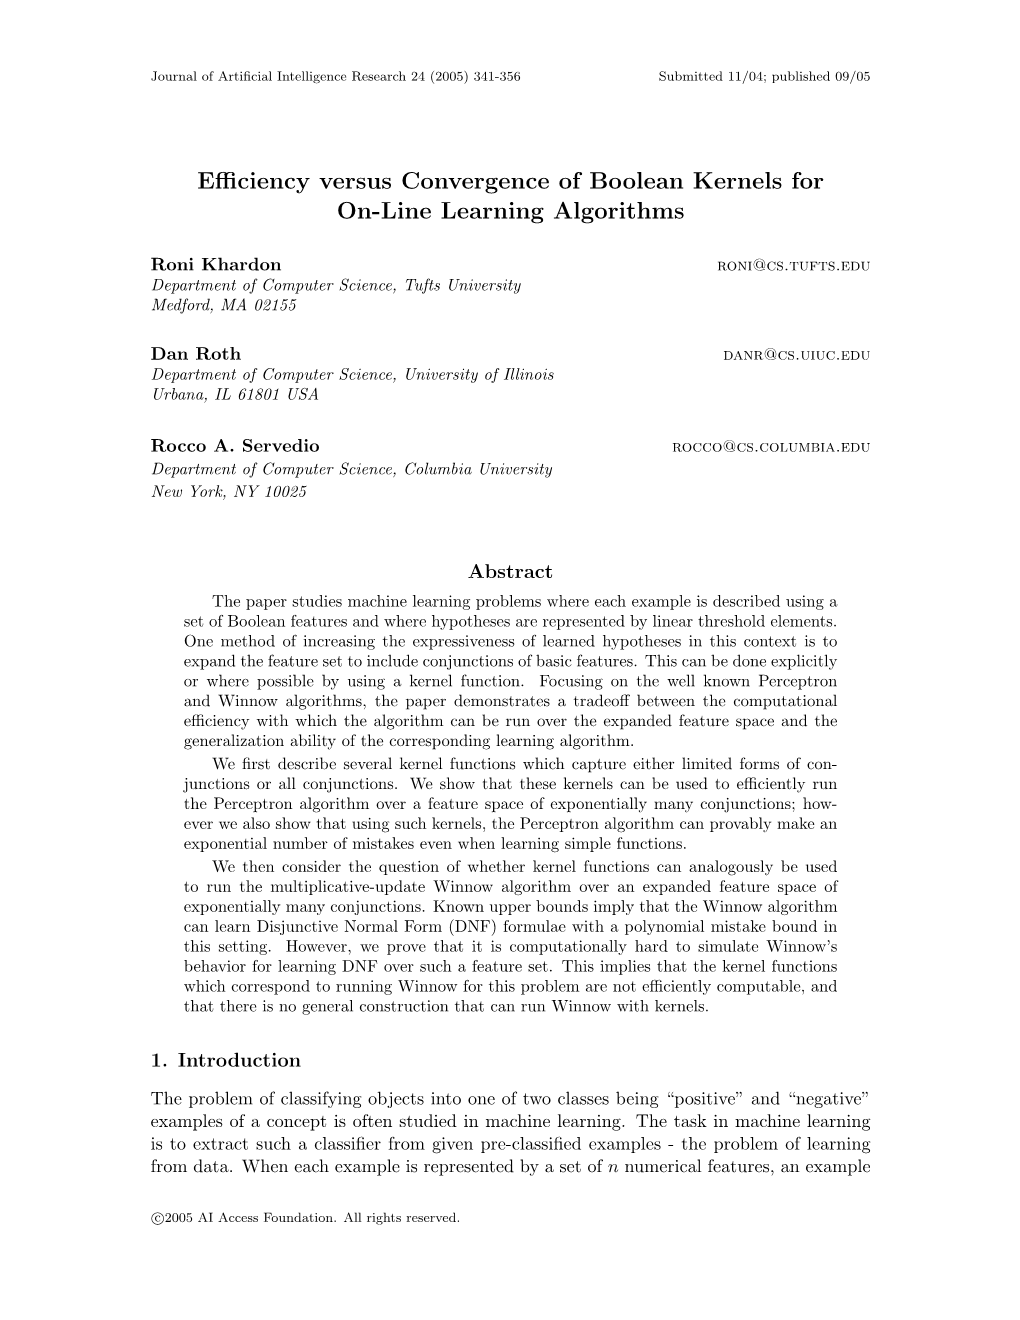 Efficiency Versus Convergence of Boolean Kernels for On-Line